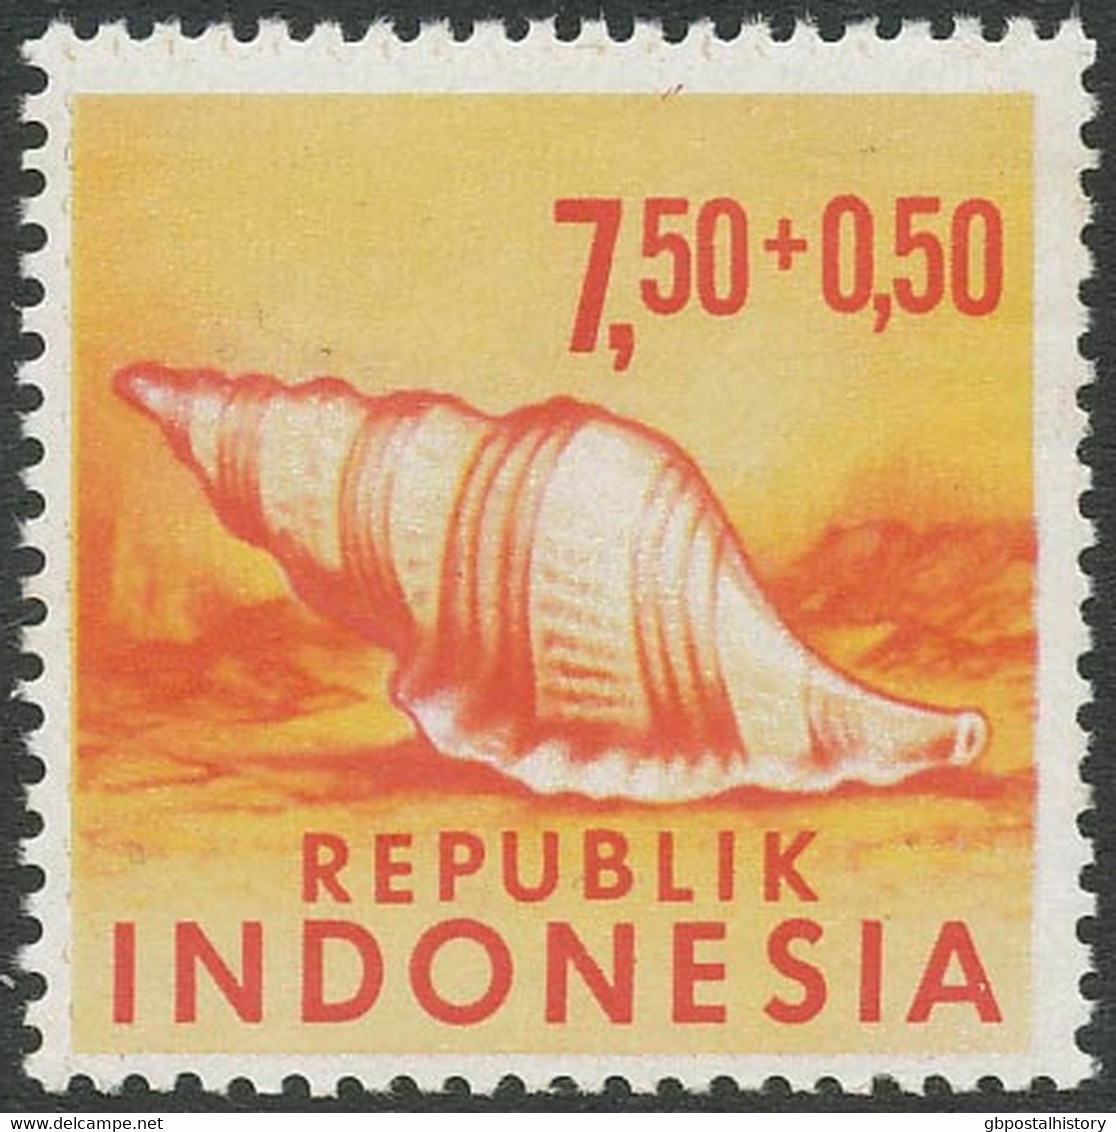 INDONESIA 1969 7.50+0.50 R Sea Snail Superb U/M MAJOR VARIETY MISSING COLORS GREENISH BLUE AND BLACK RR!! - Indonesia